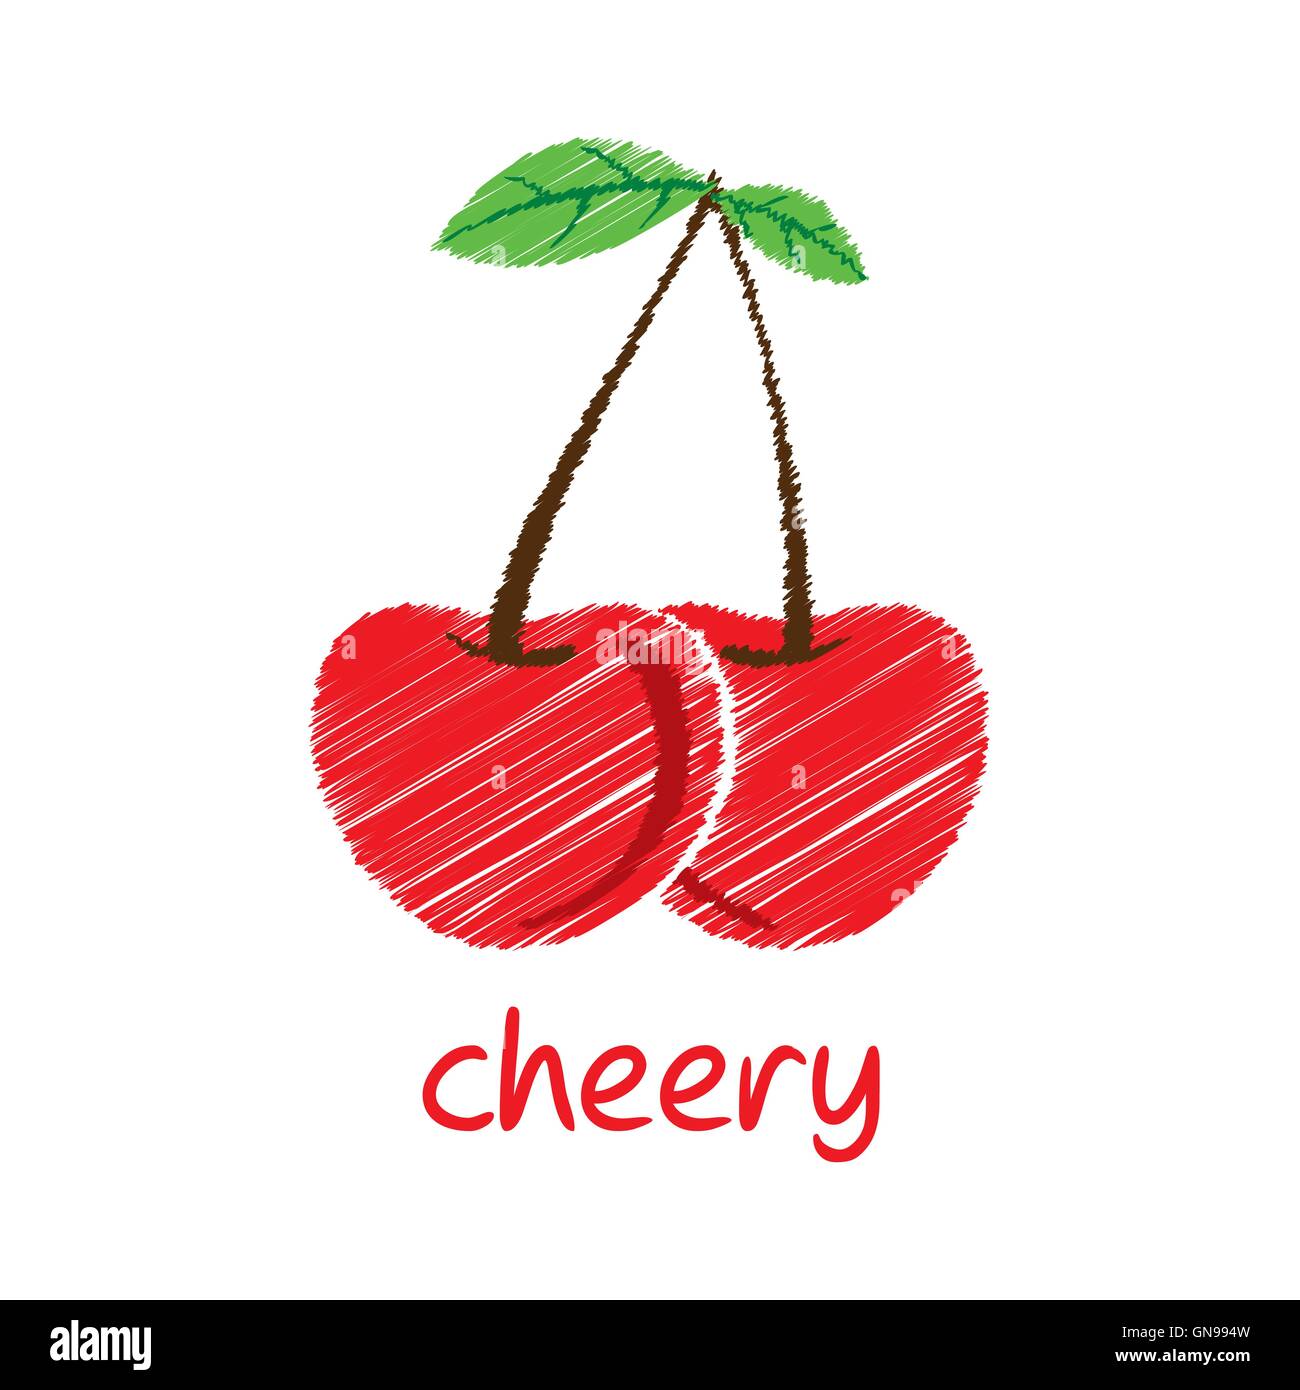 cheery-fruit-sketch-design-vector-GN994W.jpg